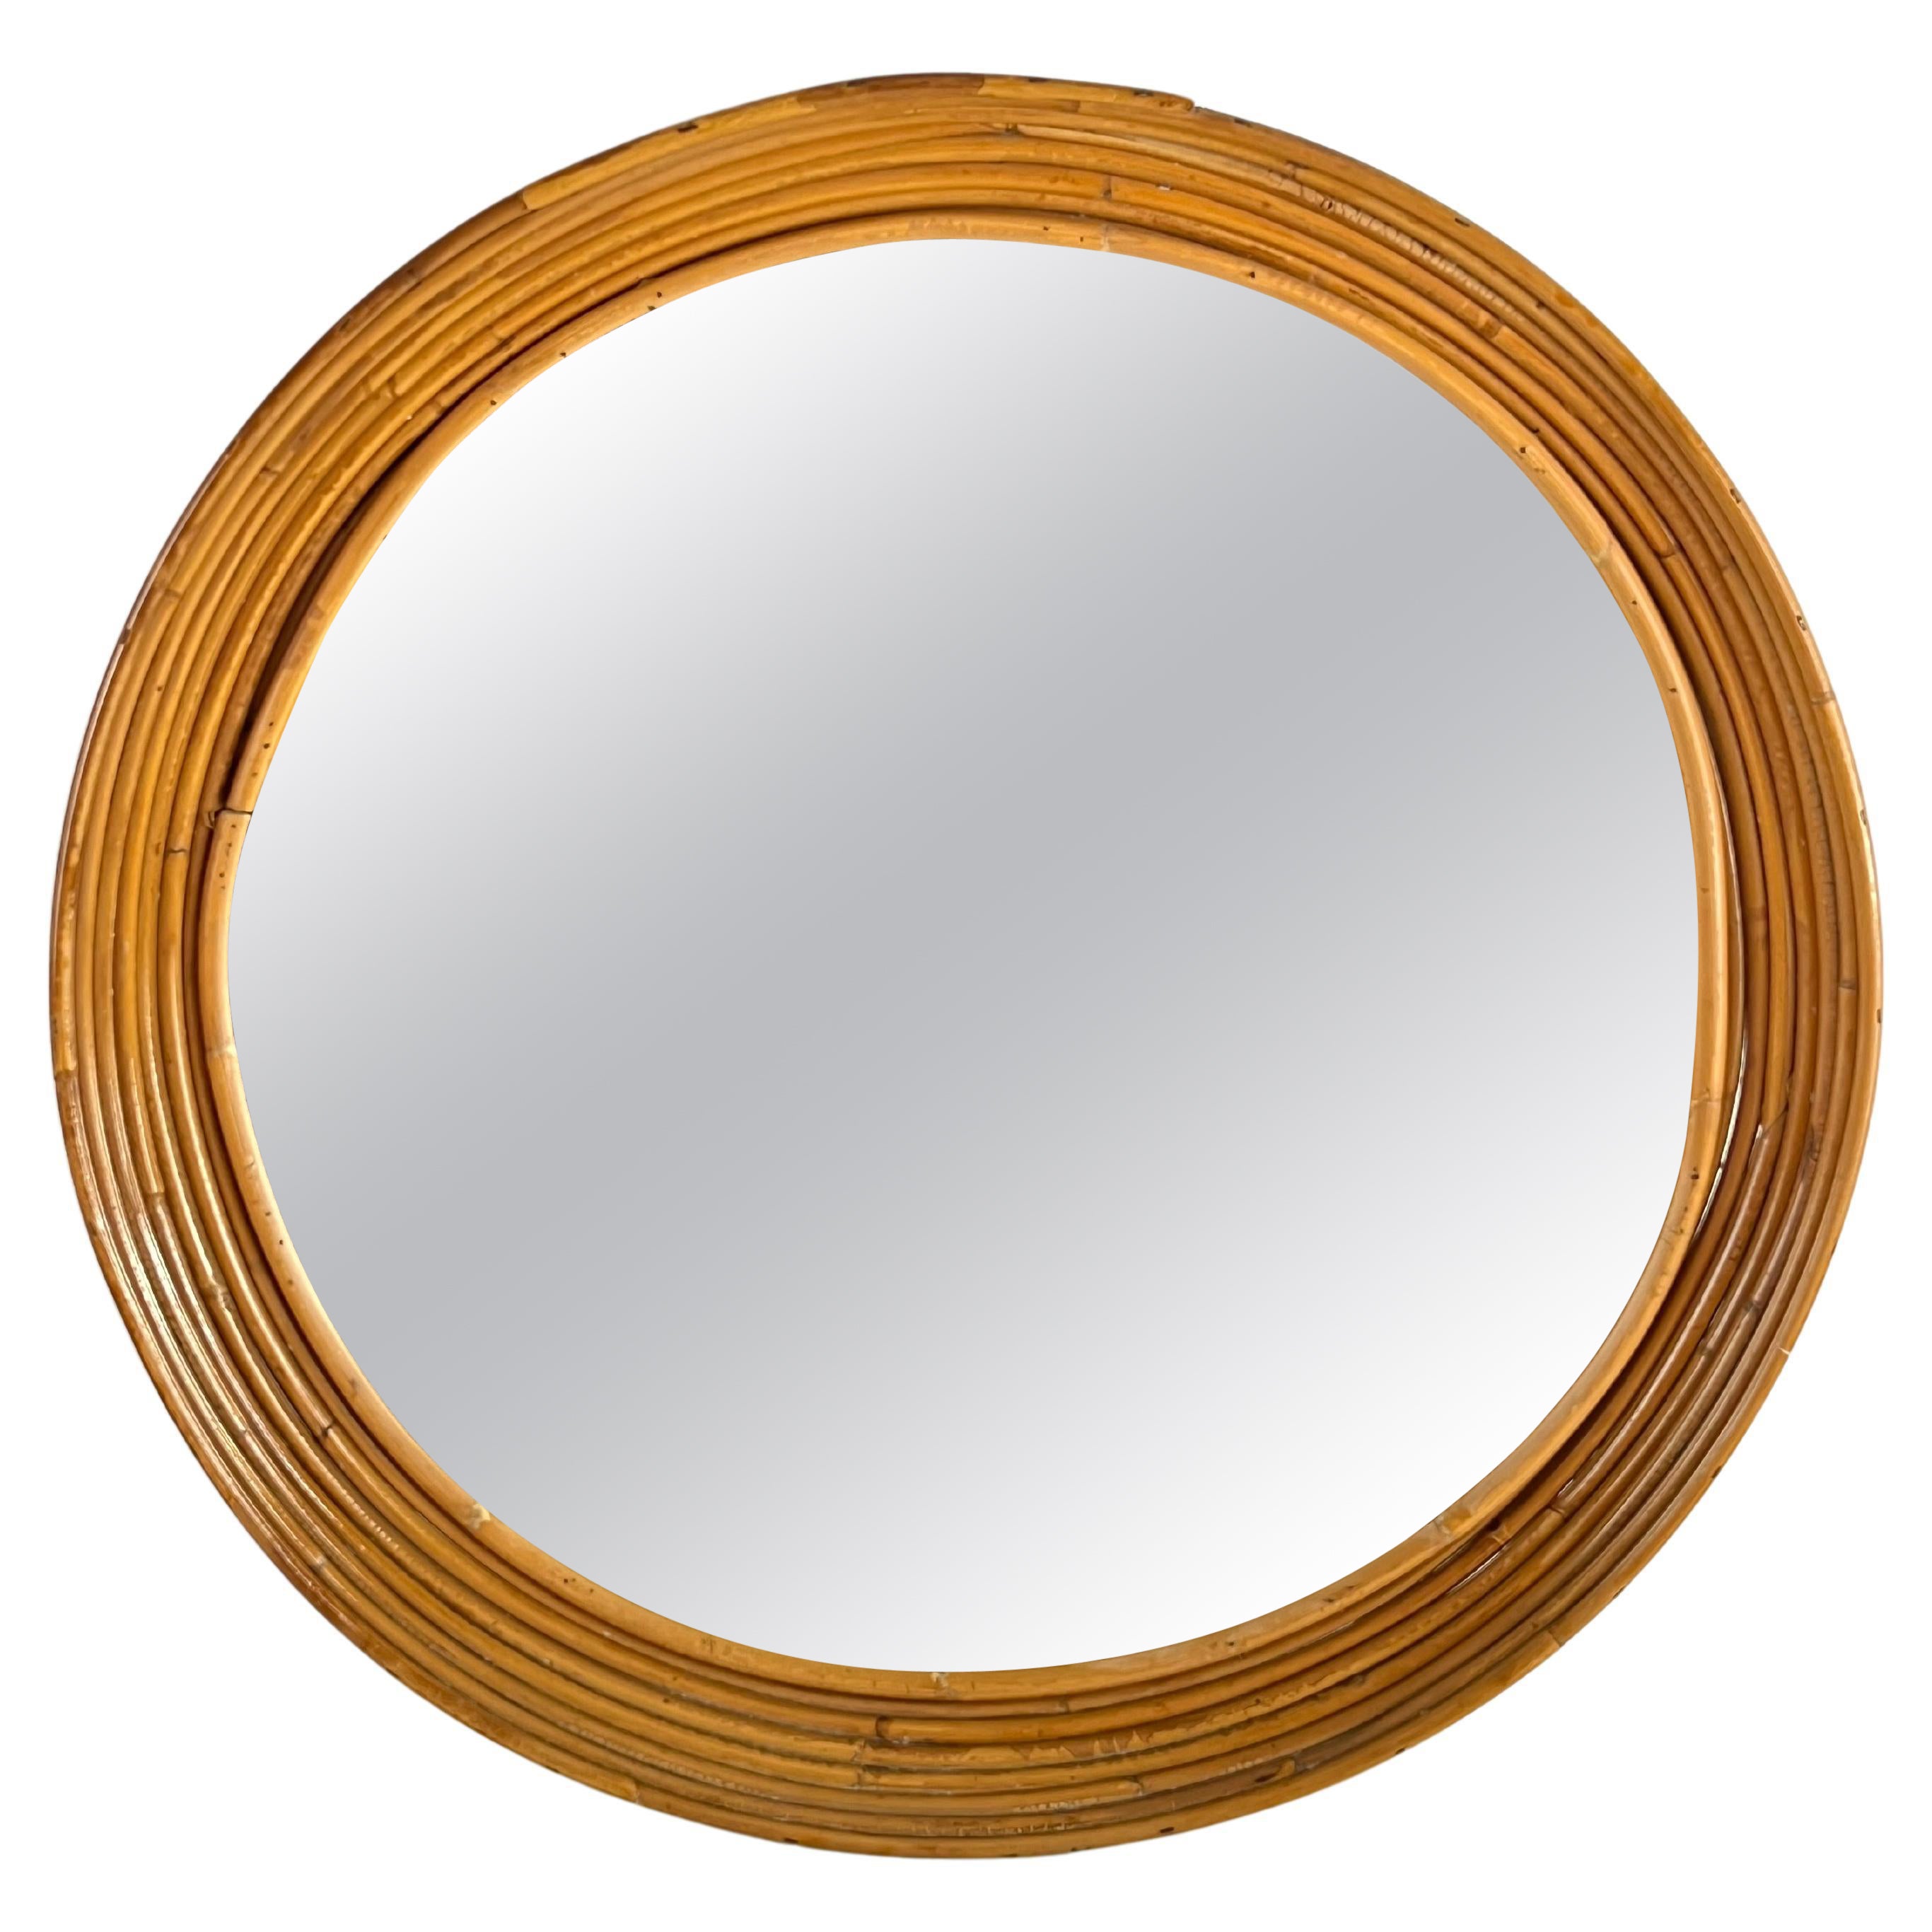 Mid-Century Round Bamboo Mirror Attributed to Vittorio Bonacina 1960s For Sale